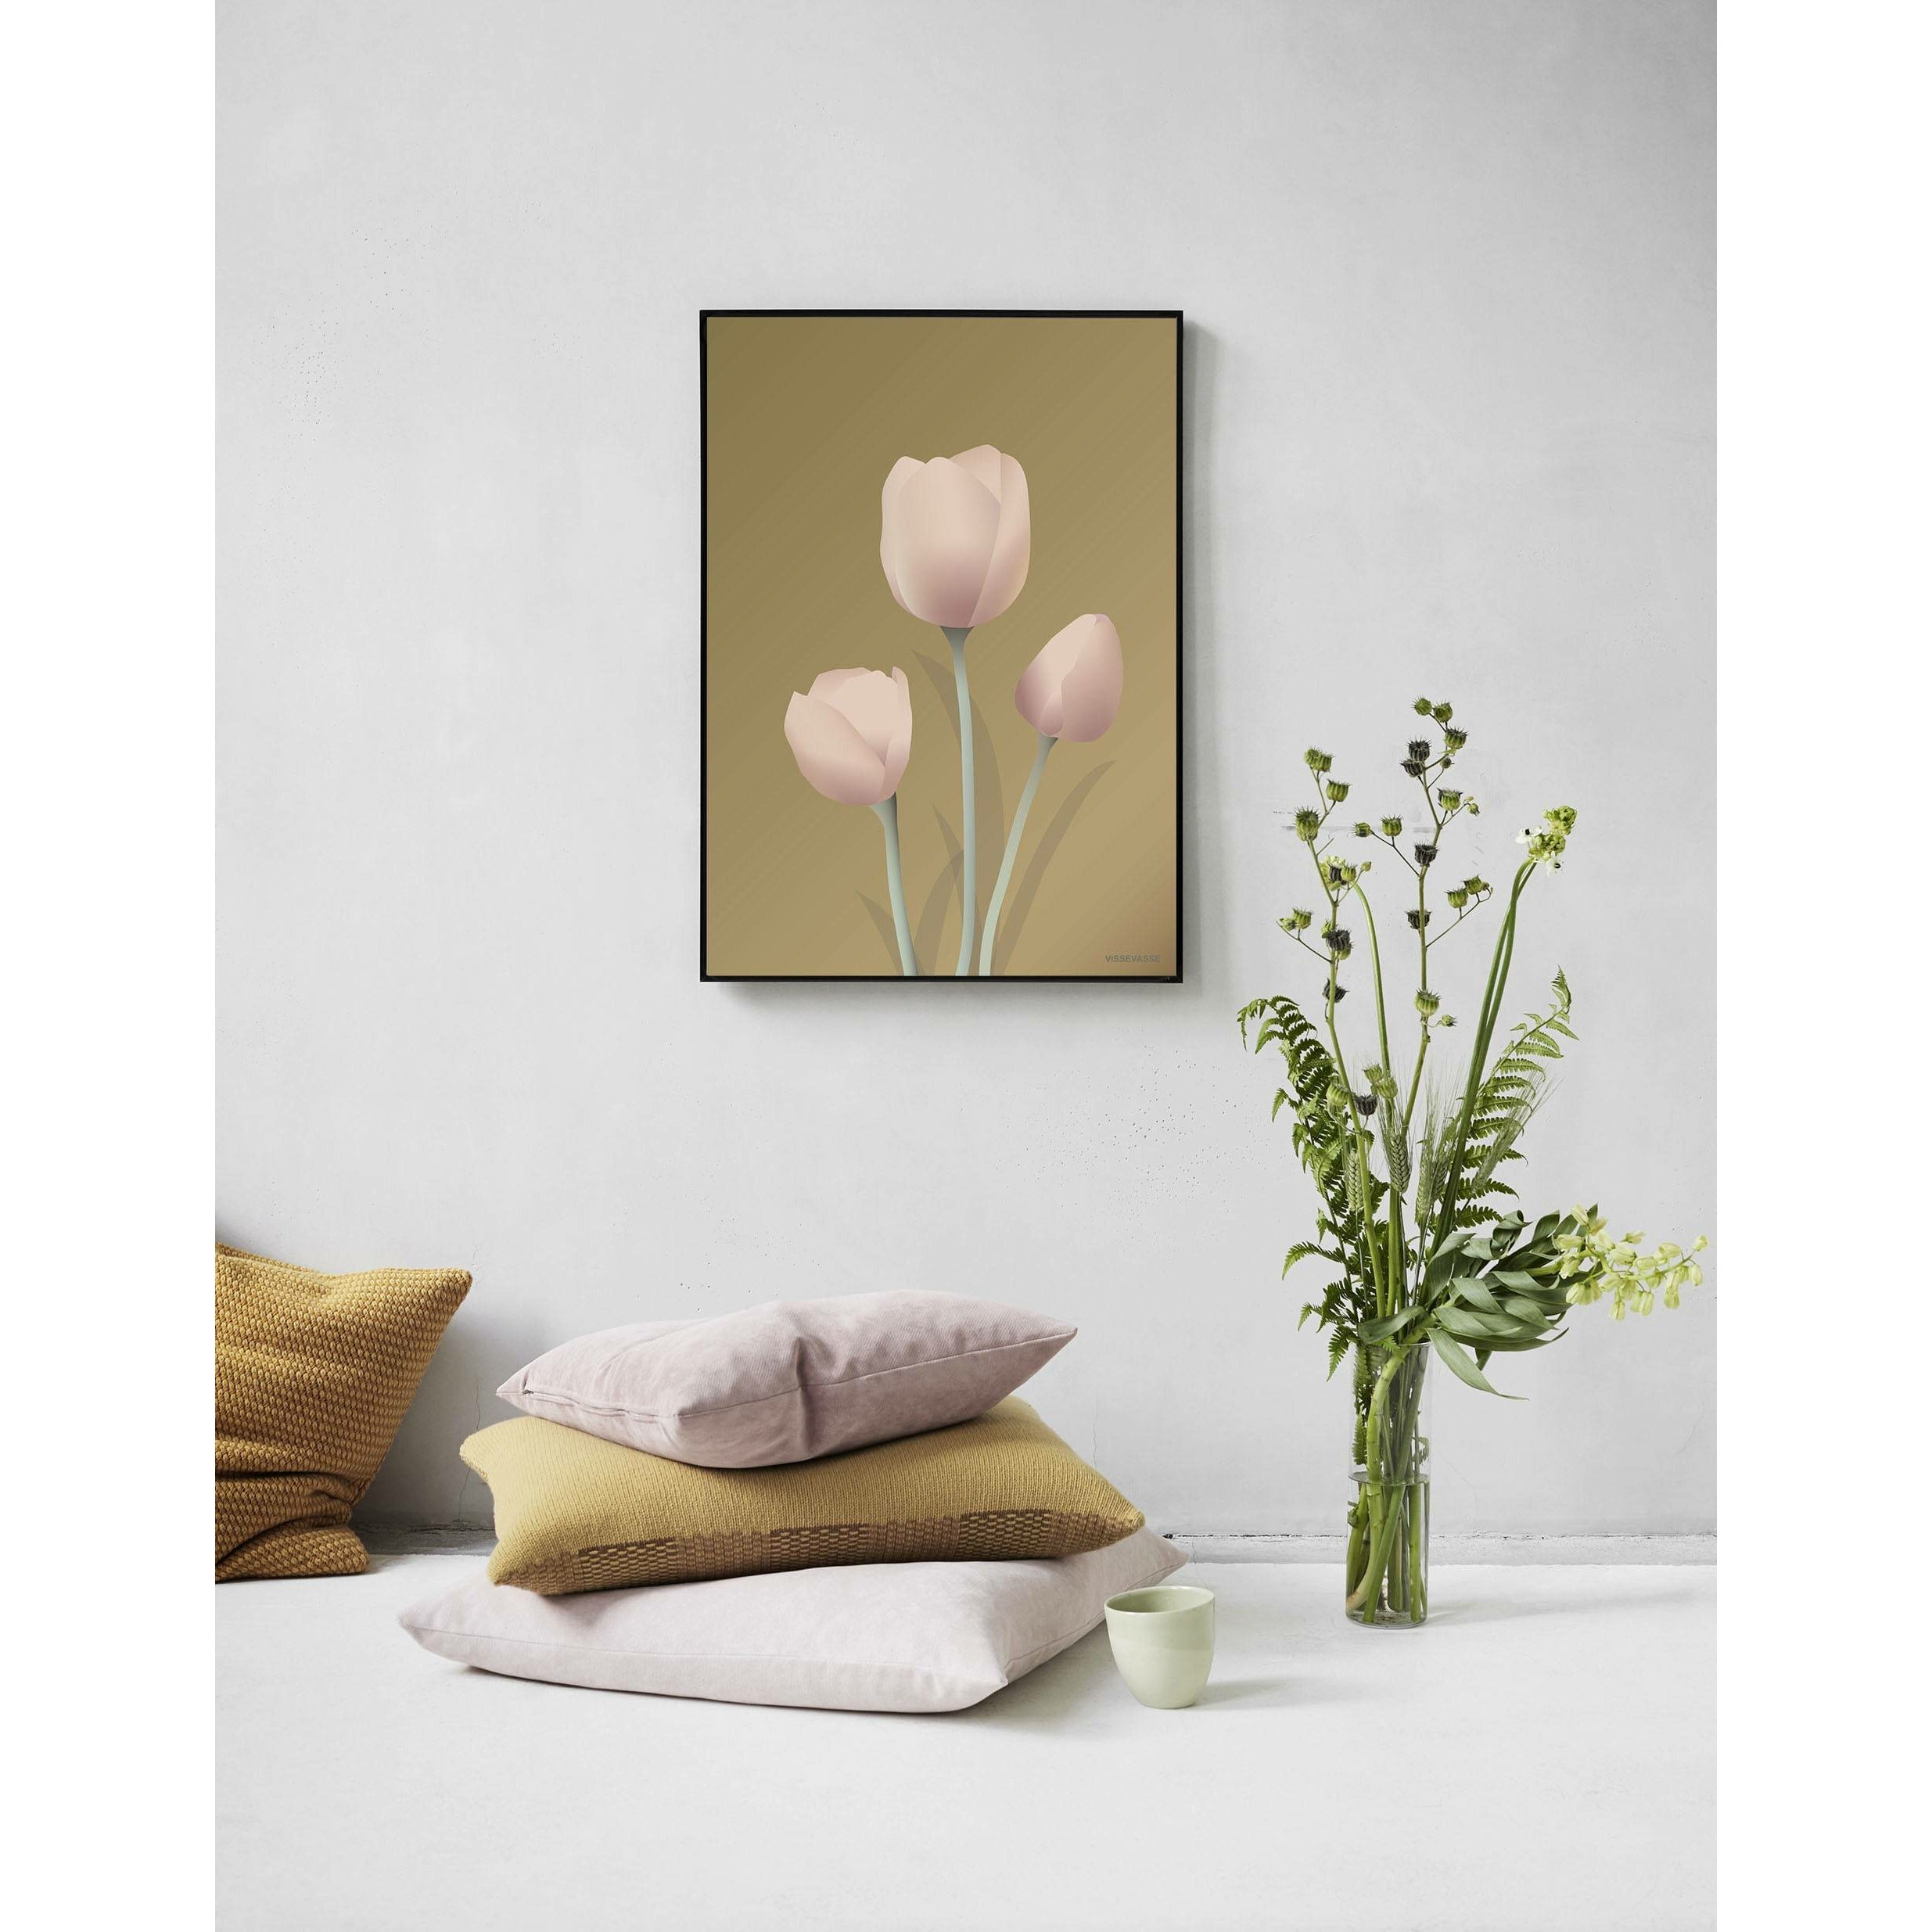 Vissevasse Tulpenposter 30 x40 cm, barnsteen